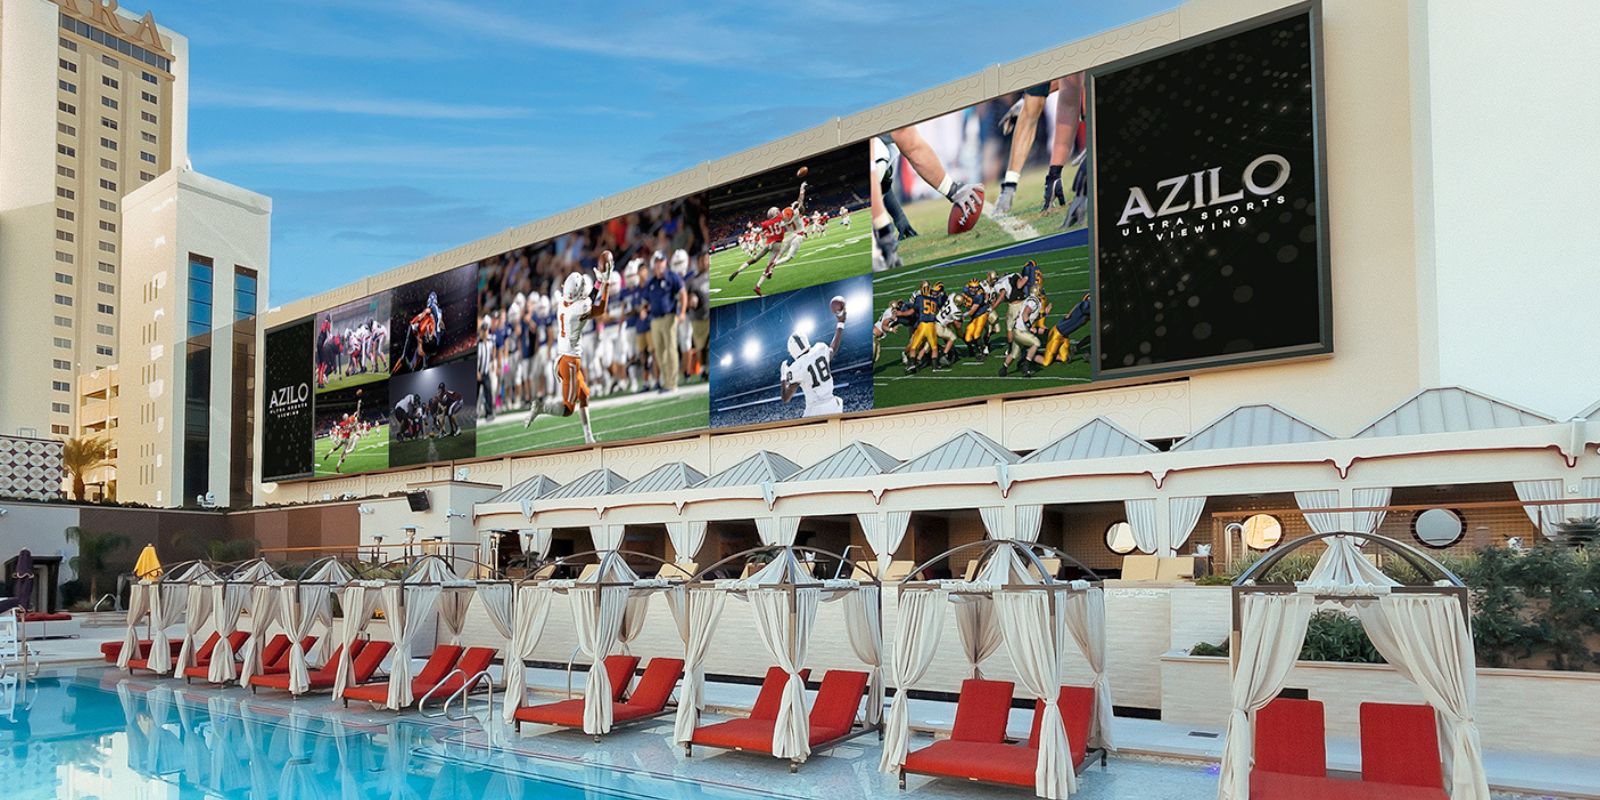 Architectural shot of football viewing at AZILO Las Vegas